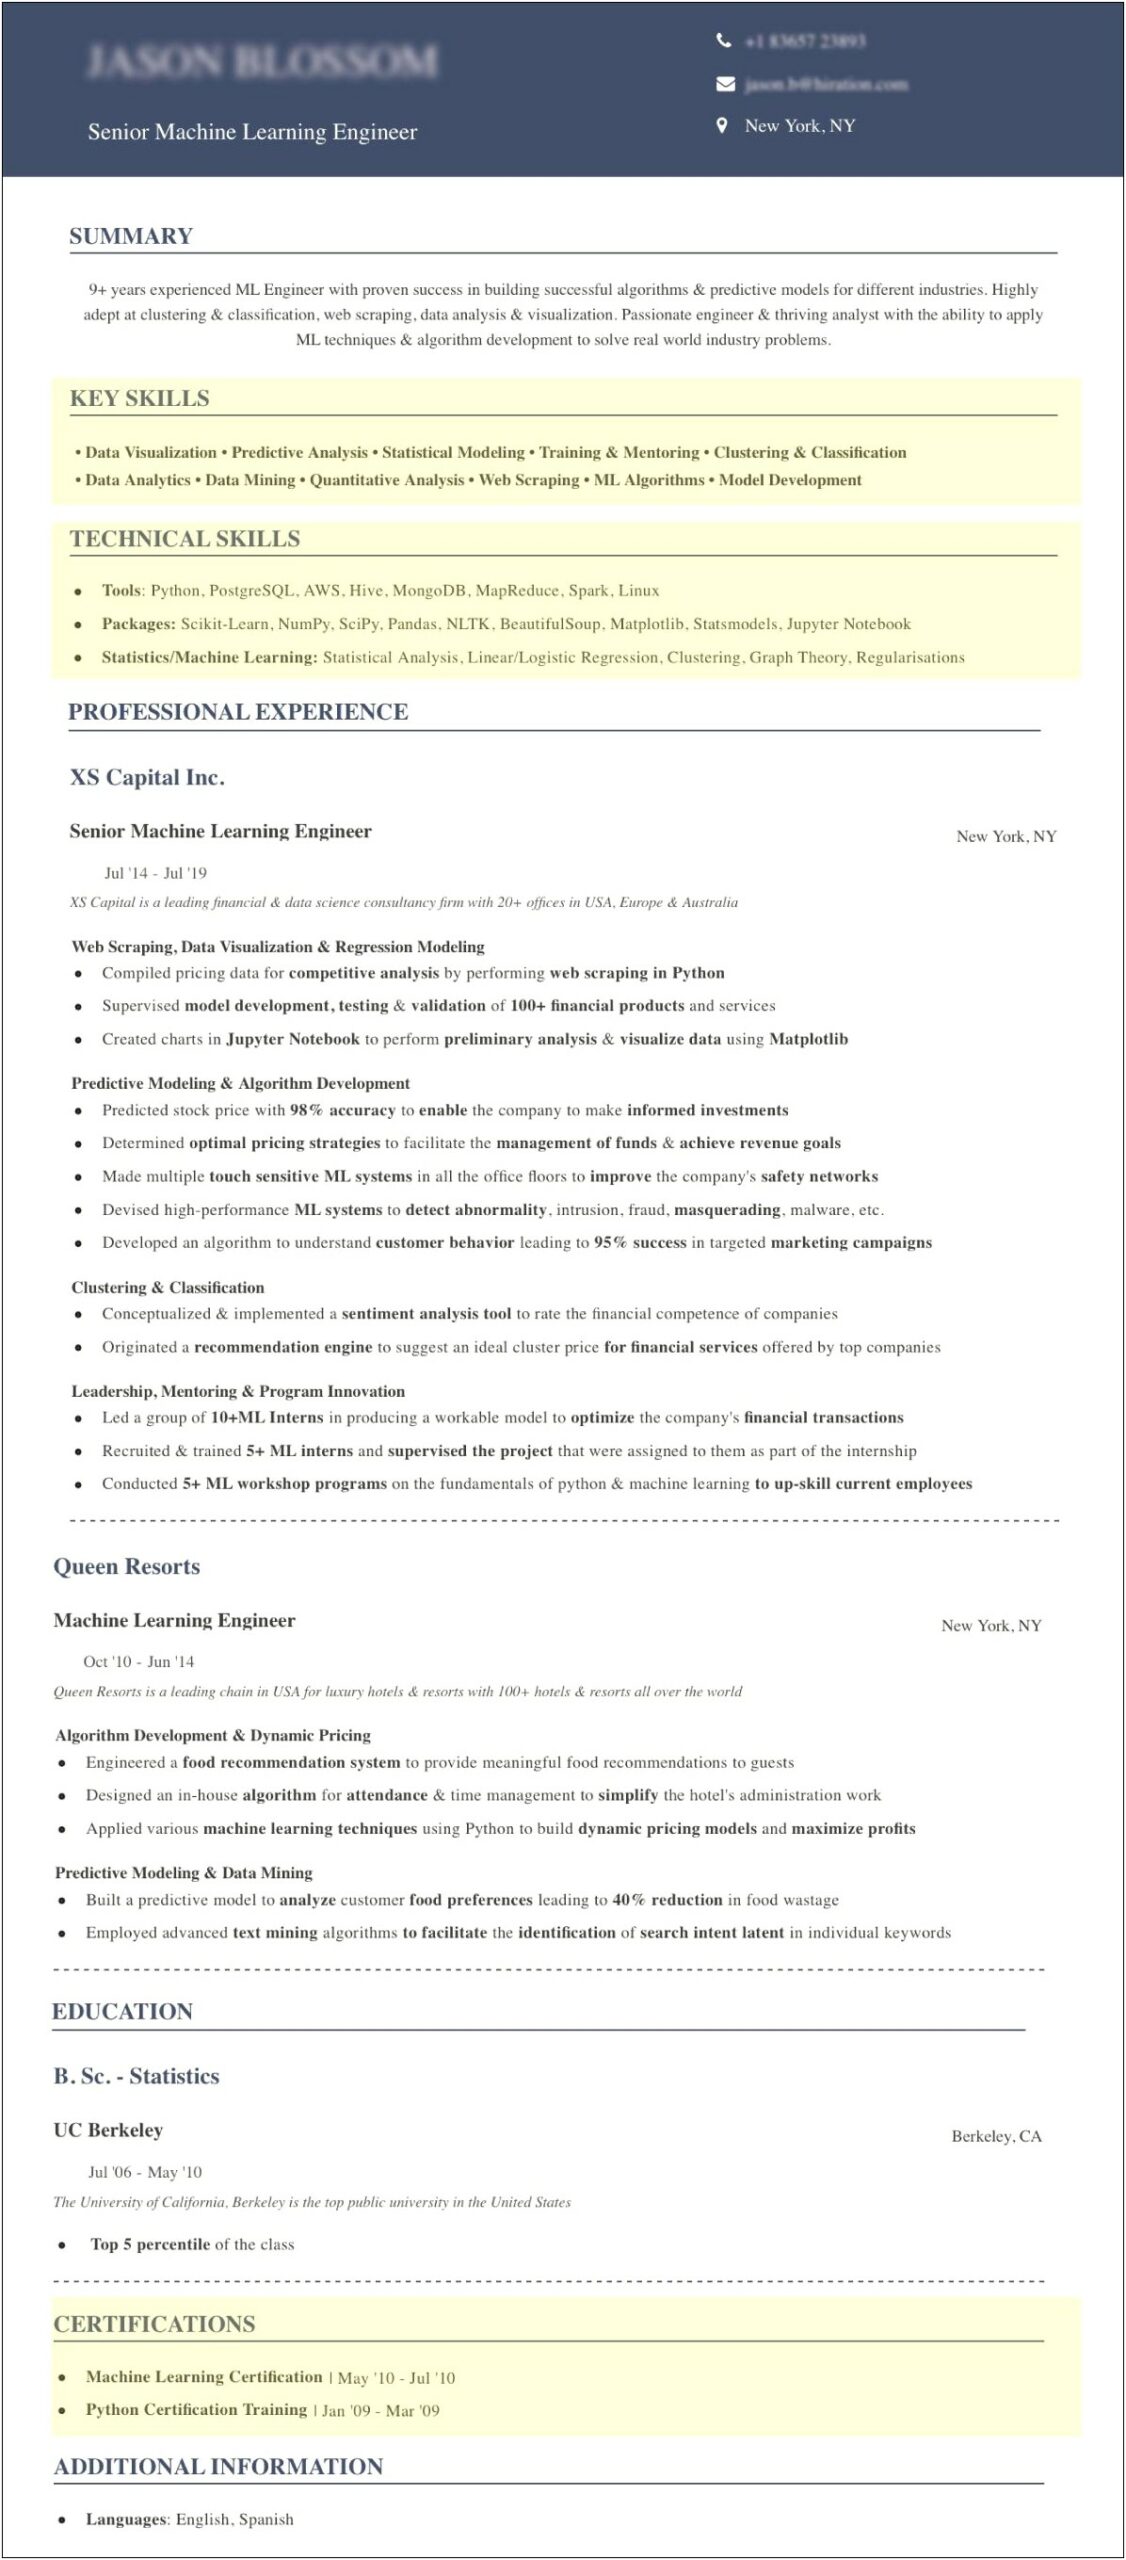 Resume Summary A Computer Graduate Student